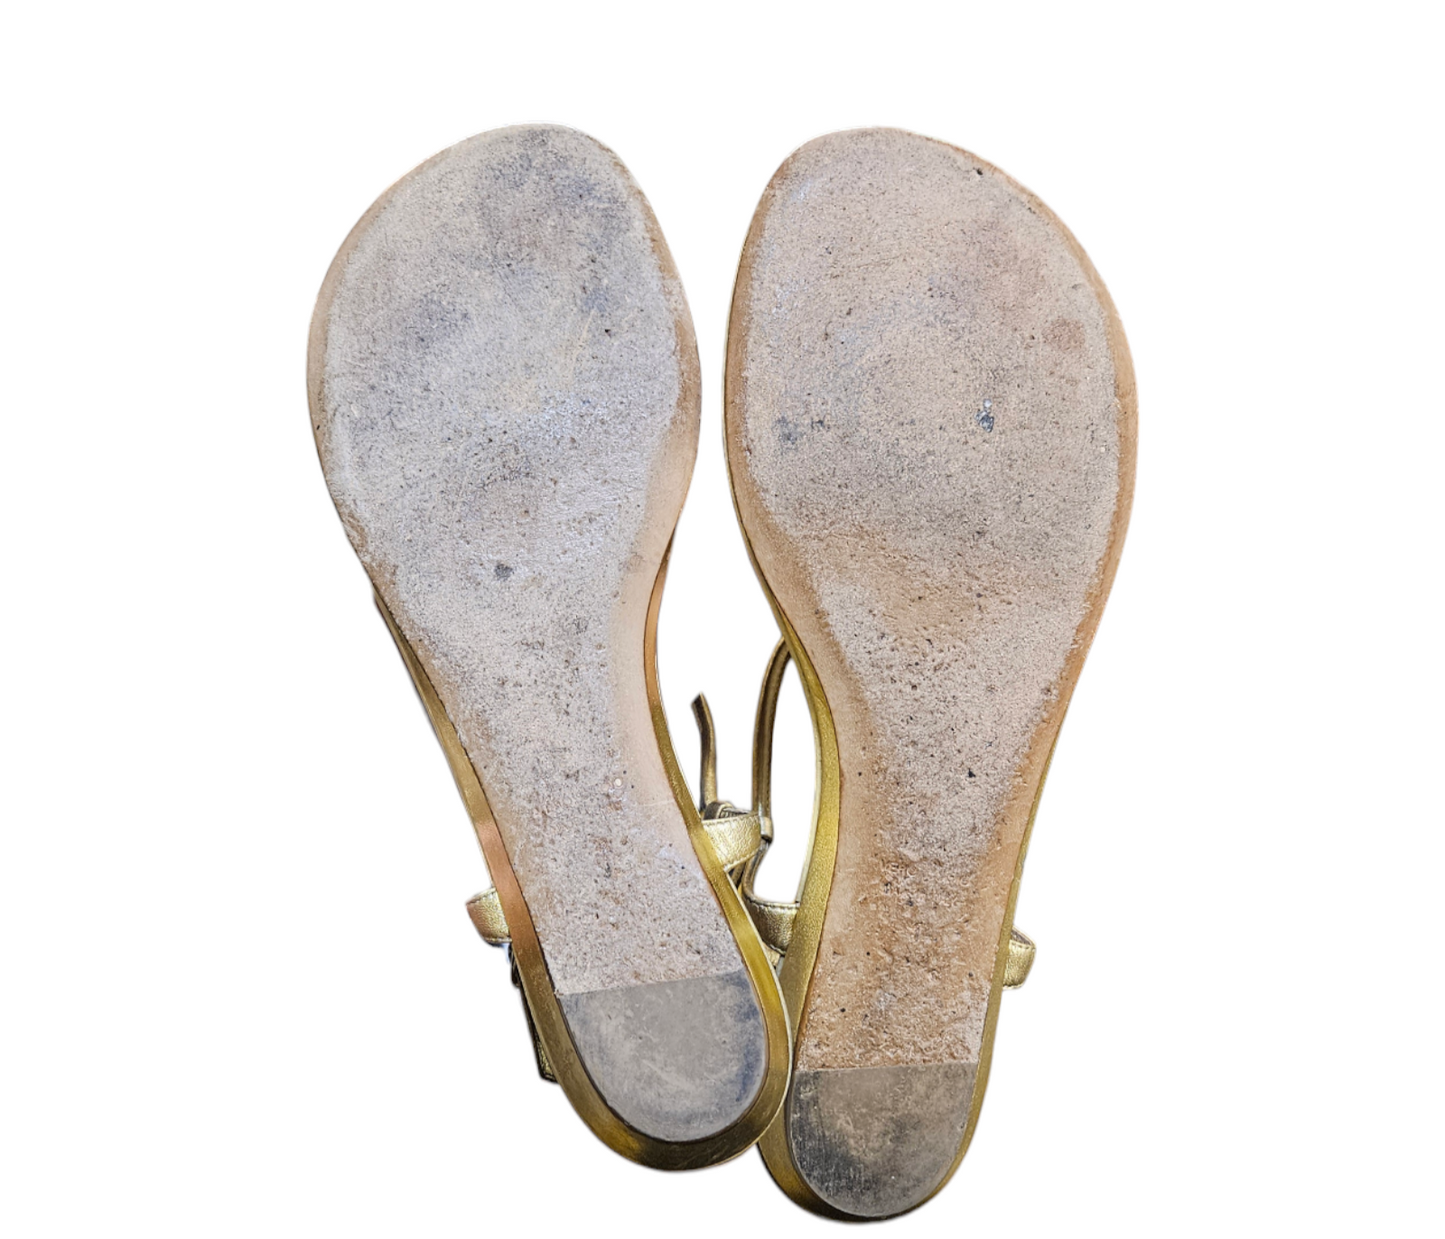 Giuseppe Santoni Strap Sandals with Jewel